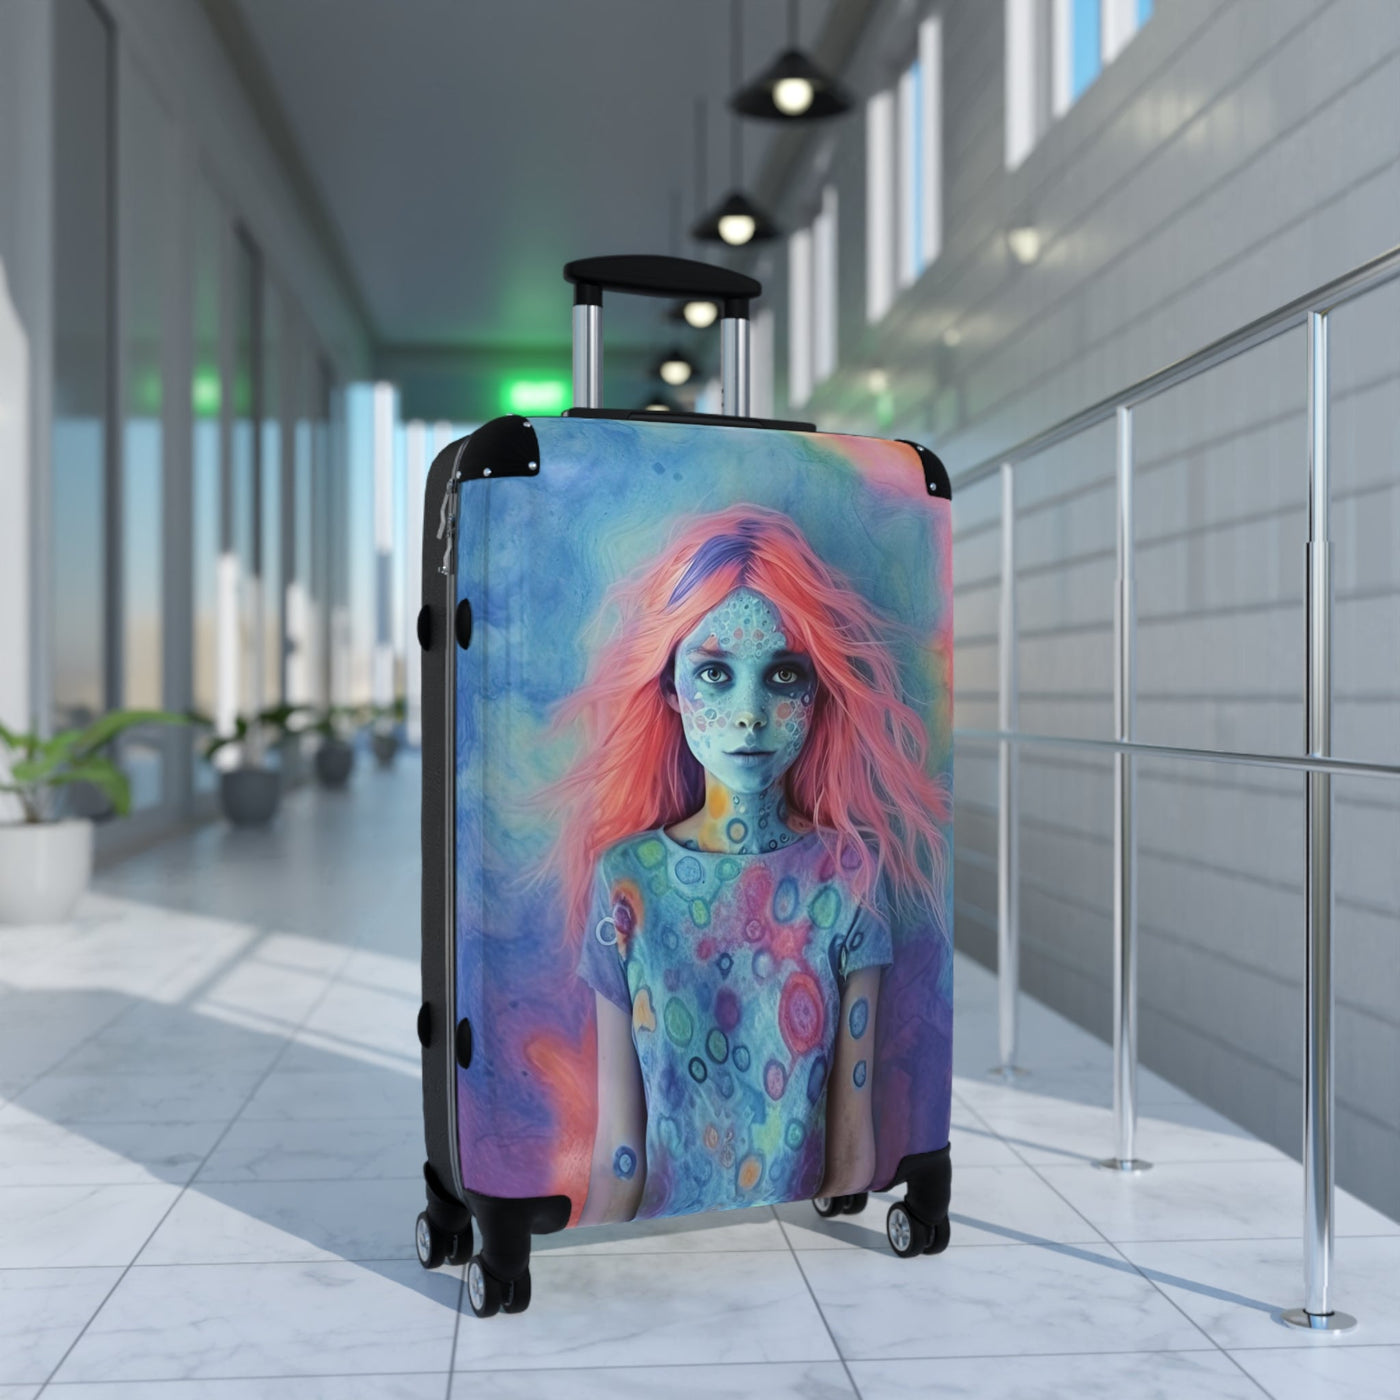 Tie-Dye Dreams Travel Suitcase (3 Sizes) - Ethereal Dreamy Girl in Watery Tie-Dye